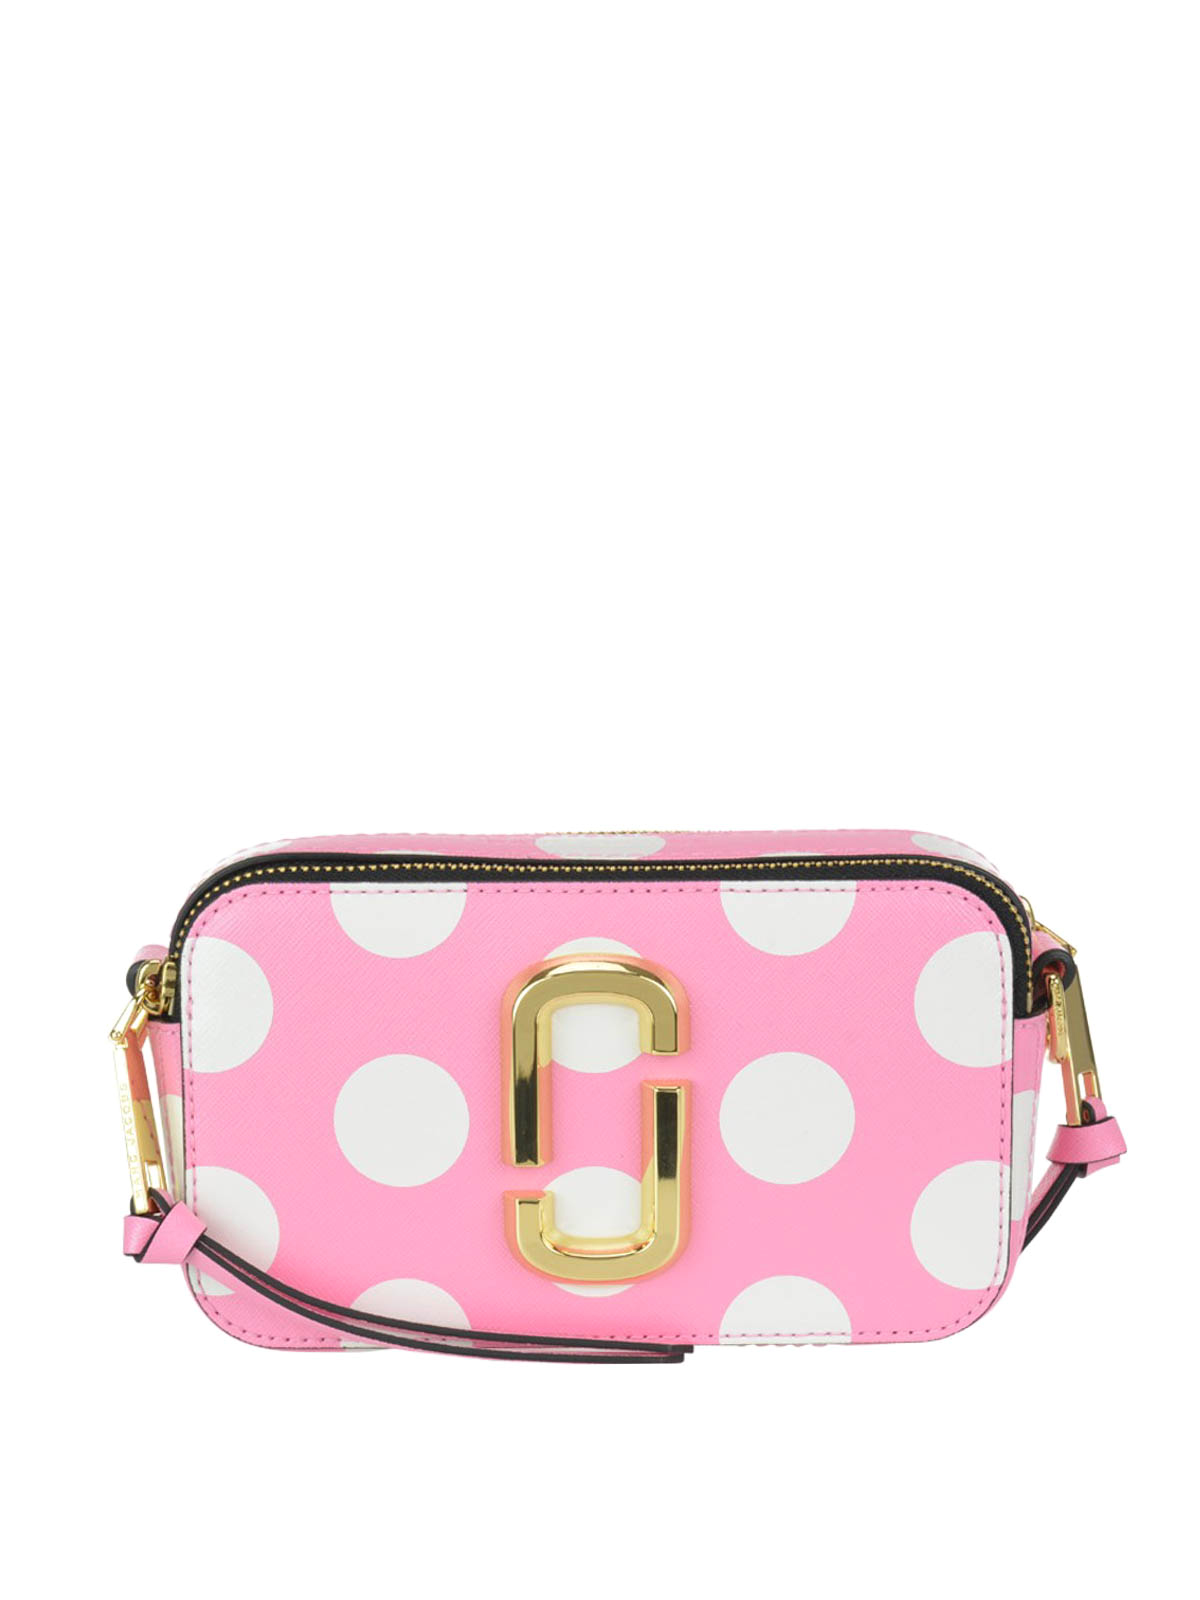 Polka Dot Snapshot Crossbody by Marc Jacobs Handbags for $55